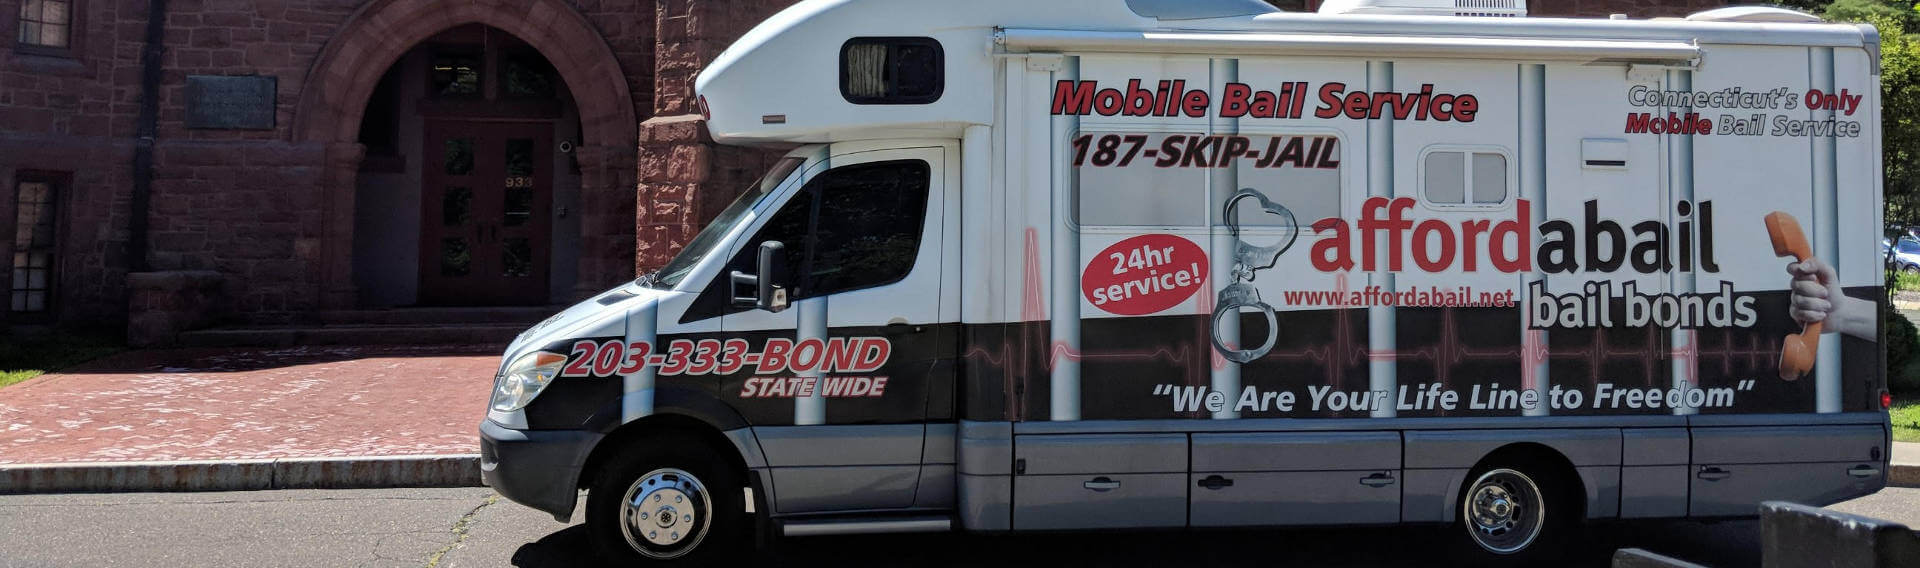 Mobile bail bonds service in Shelton CT